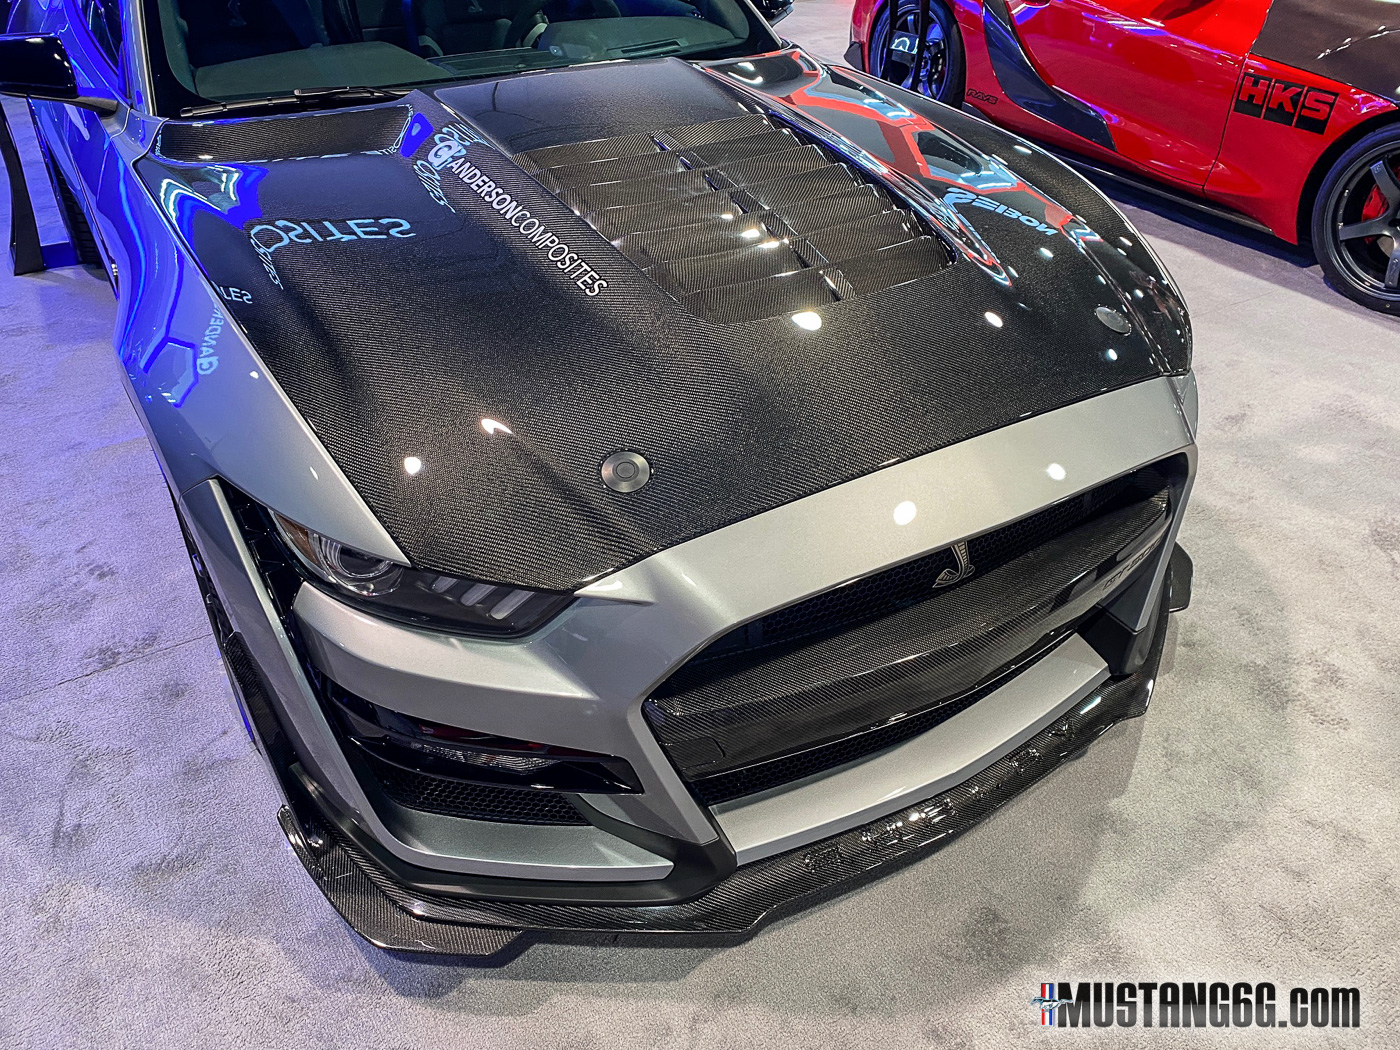 Anderson-Composites-2020-Shelby-GT500-Build-SEMA-2019-3.jpg